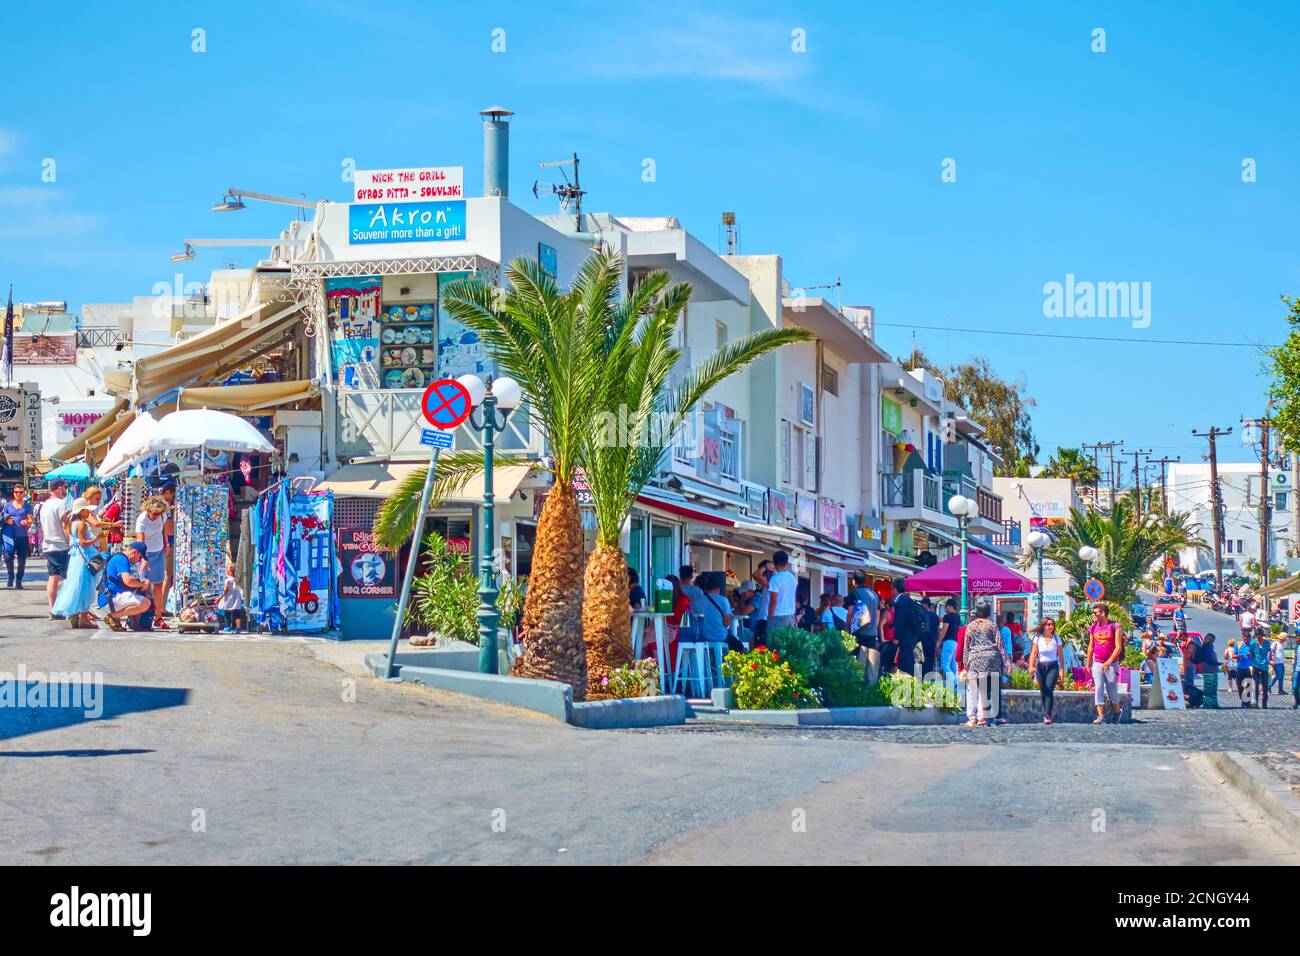 Fira, Santorini island, Greece - April 25, 2018: Shopping district with walking people in Fira (Thera) Stock Photo